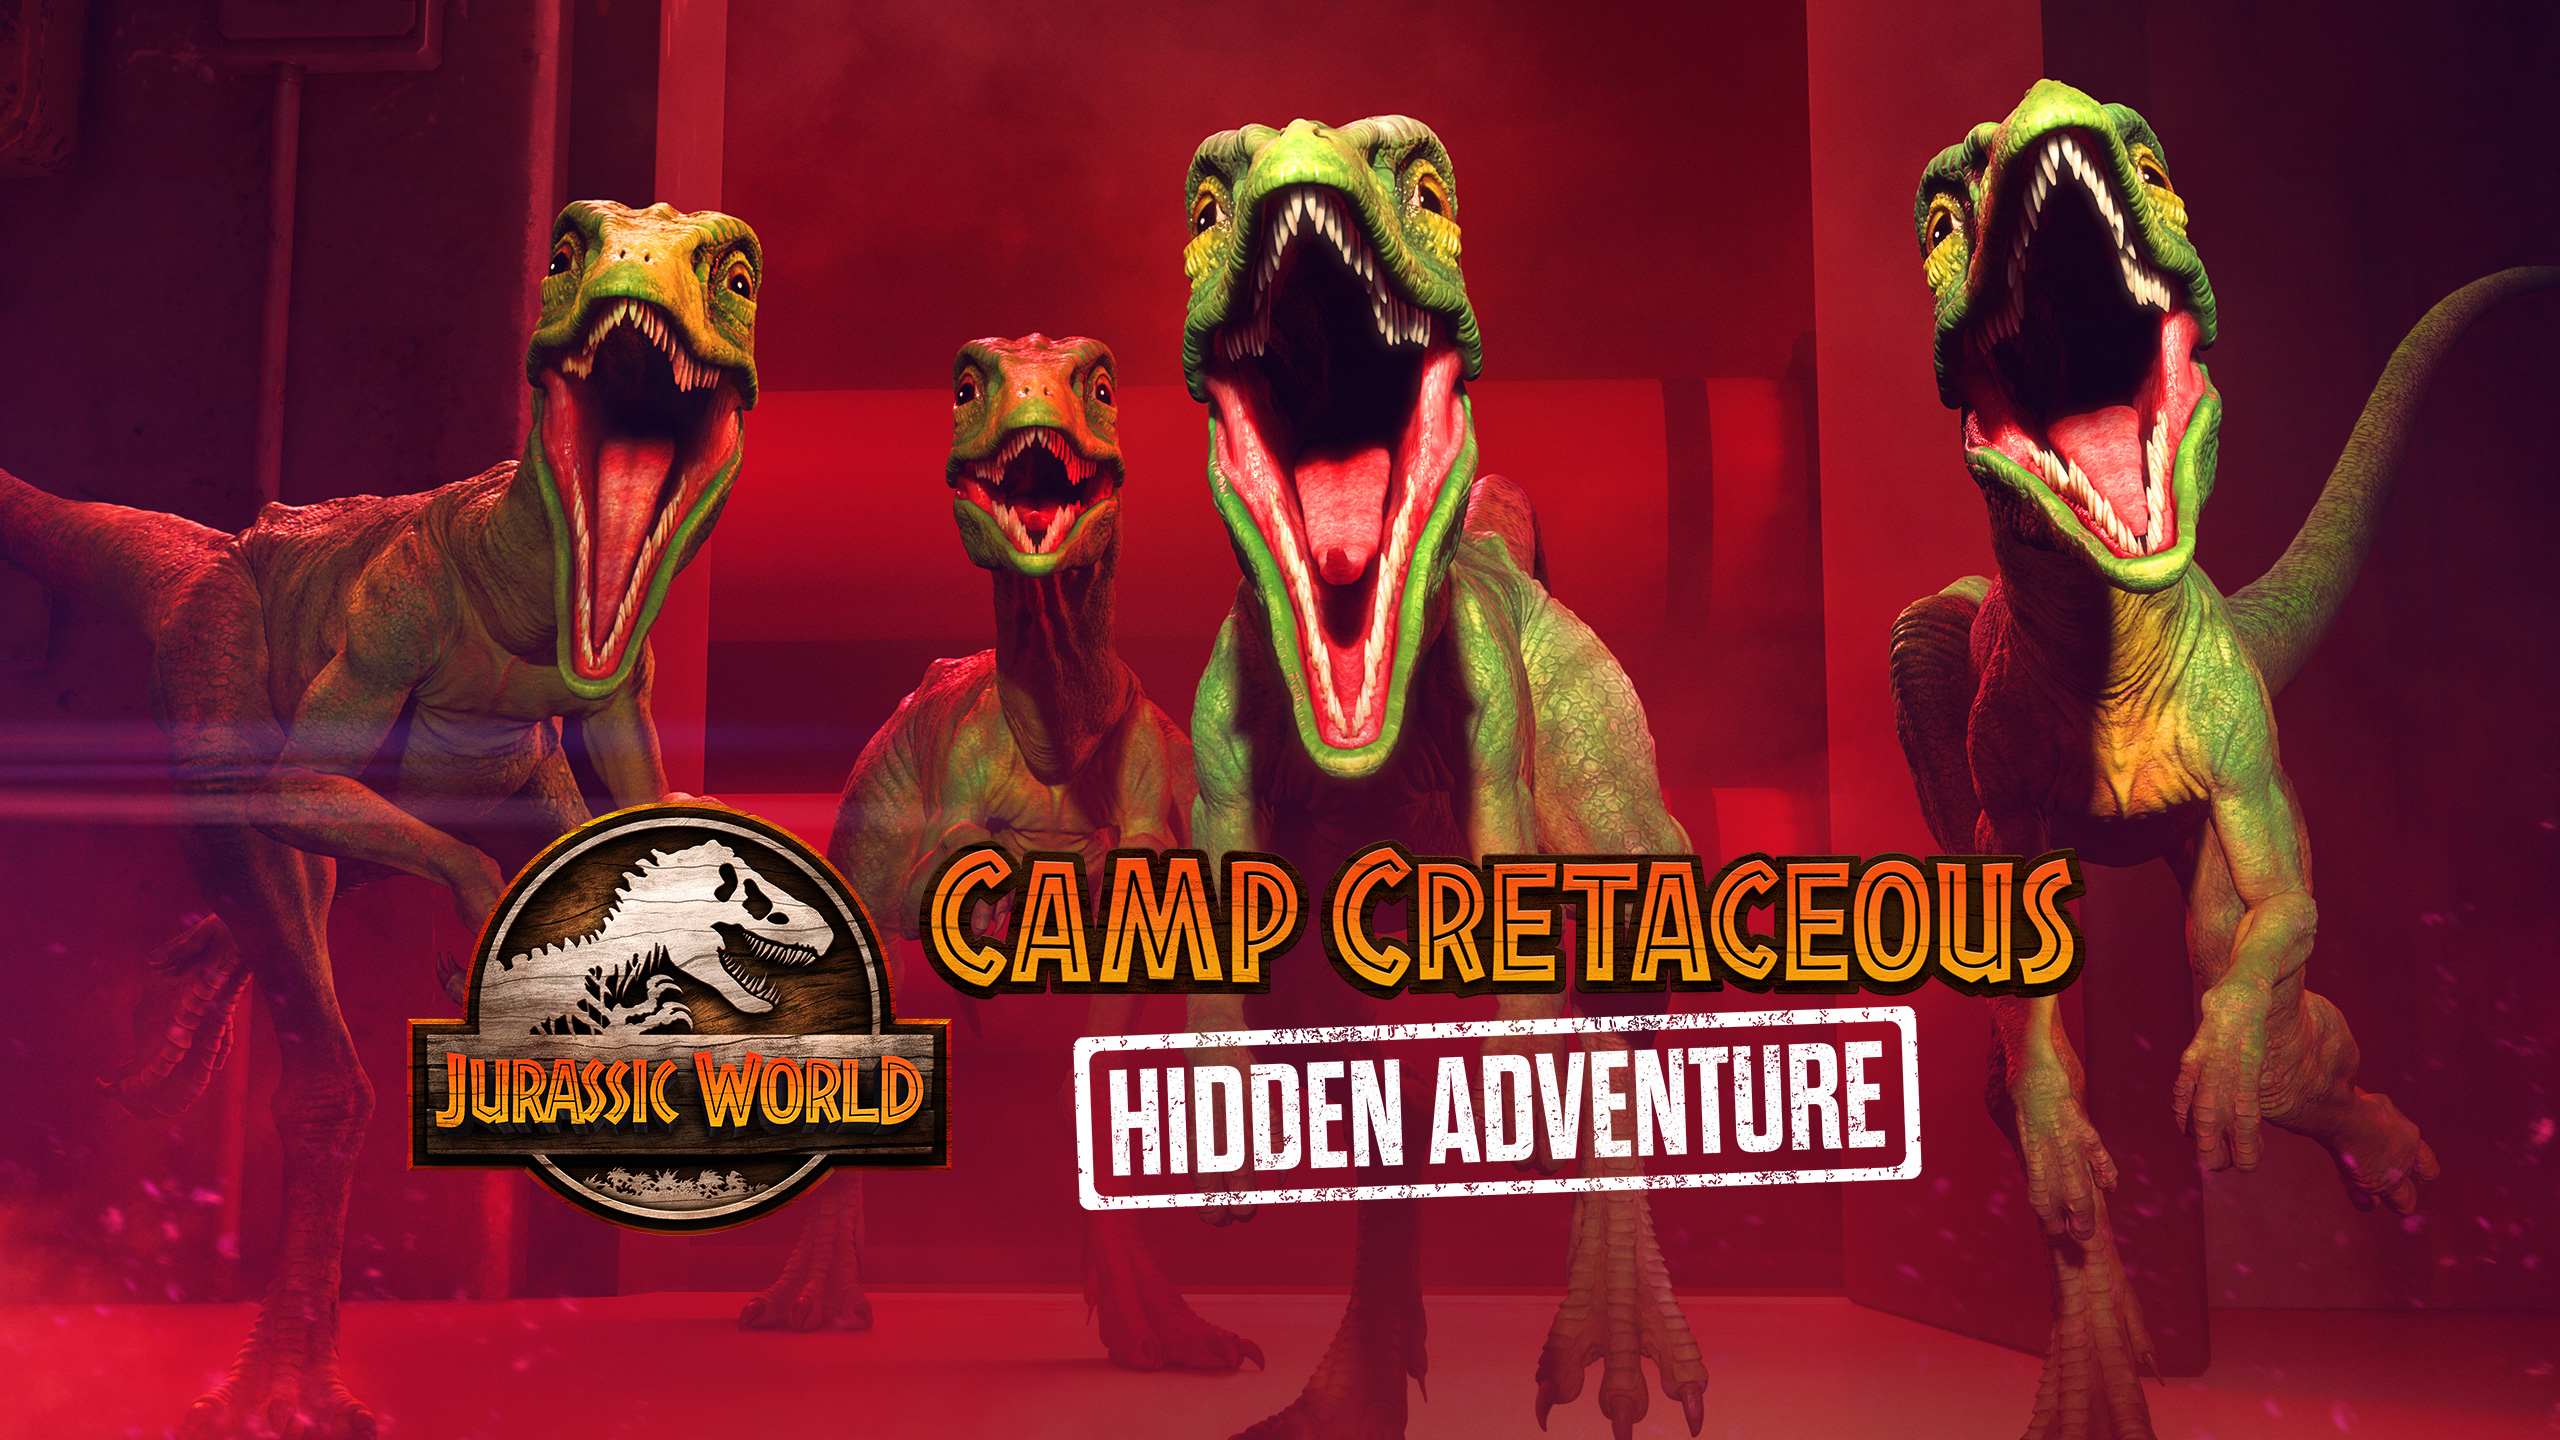 Jurassic World Camp Cretaceous: Hidden Adventure | Concept, Finishing & Illustration